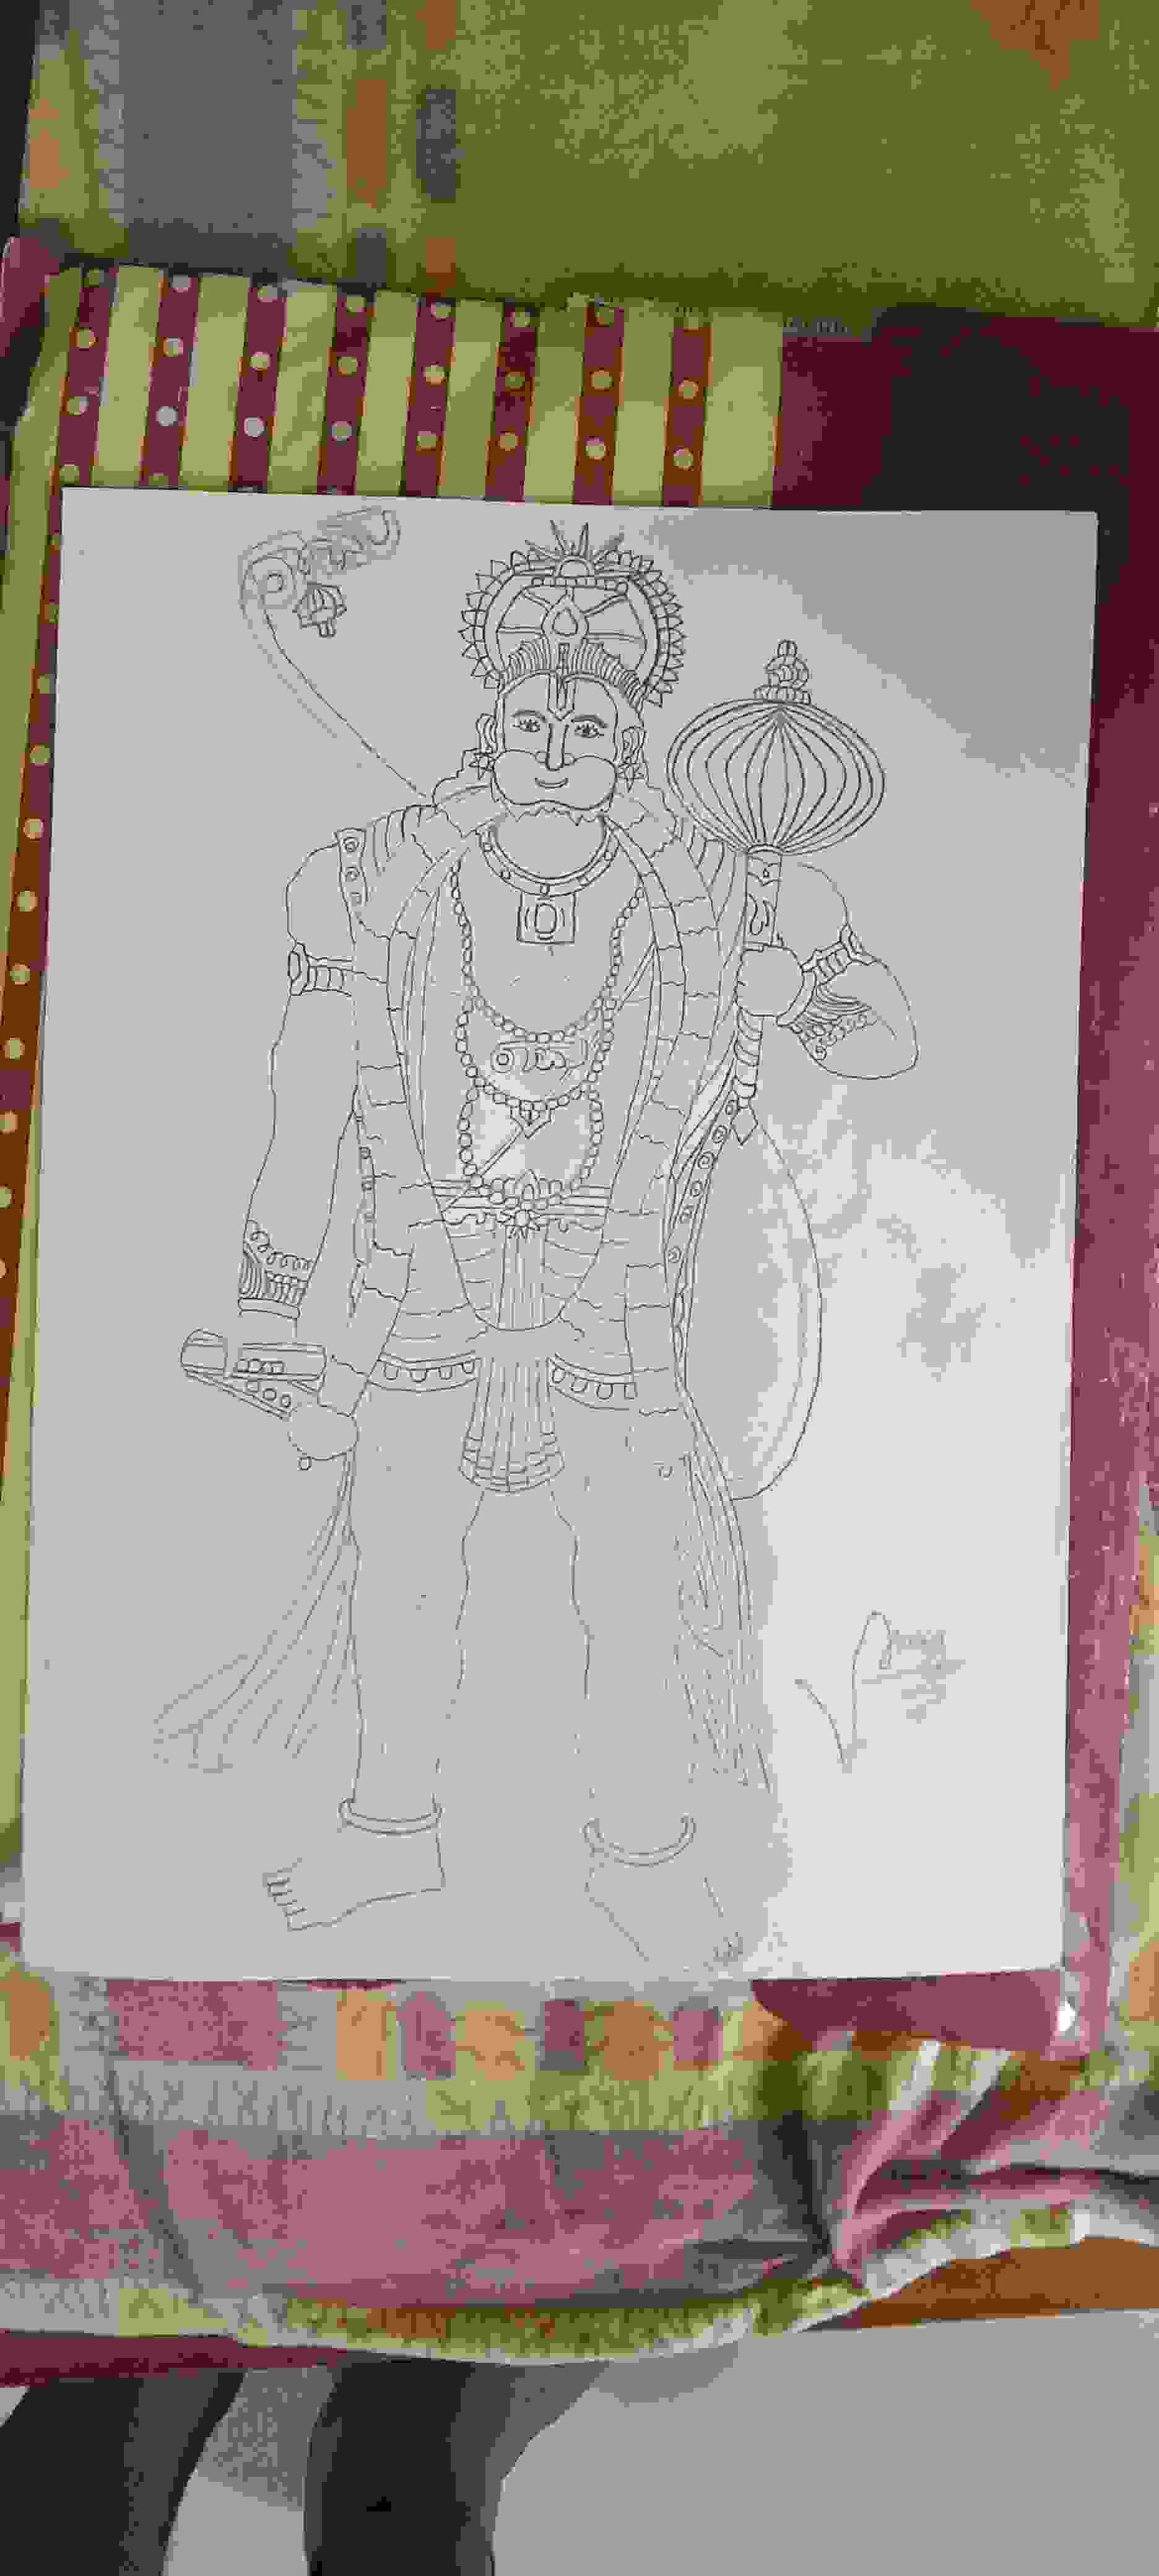 Photo 15 of 76, Hanuman Art from Facebook